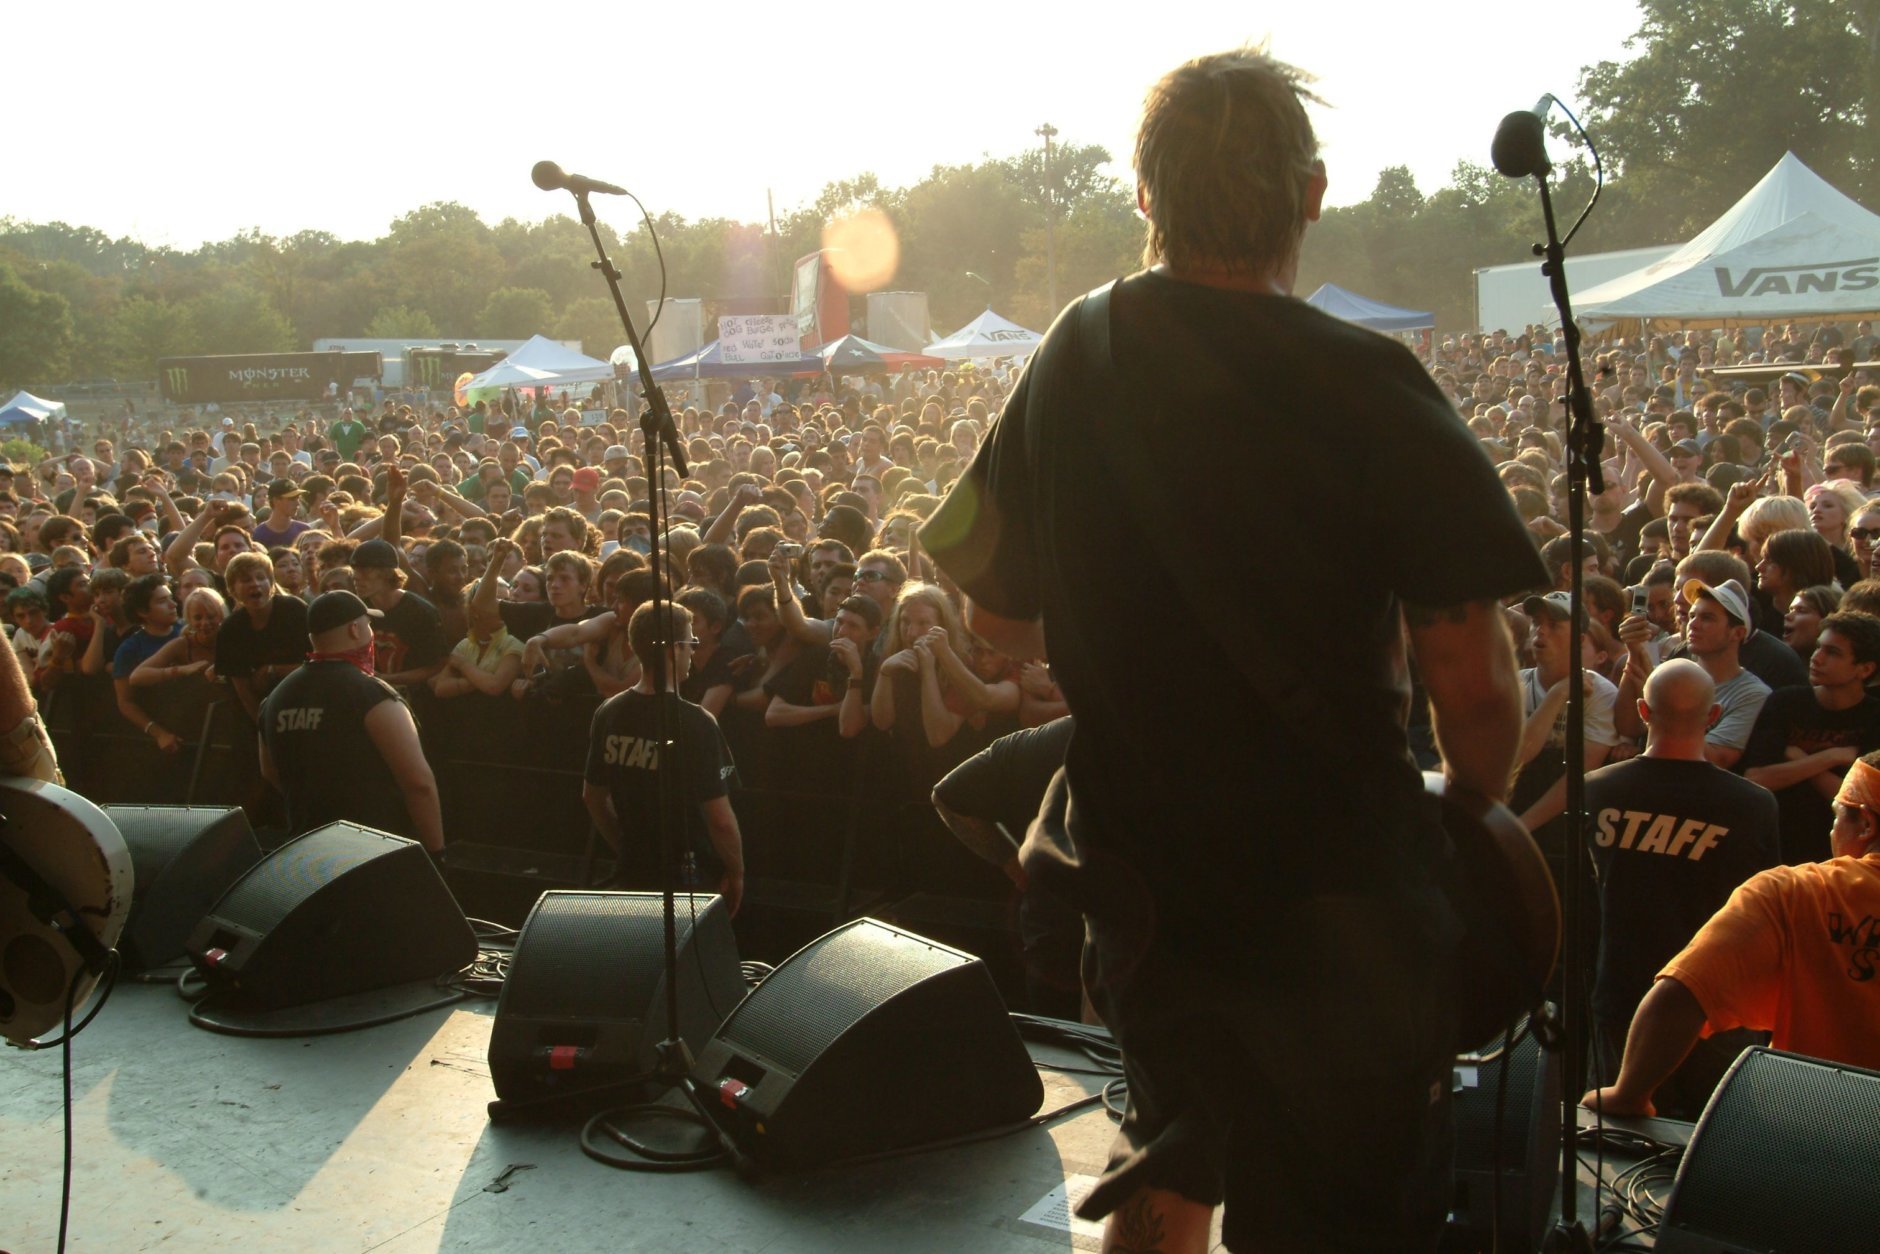 The crowd at Warped Tour 2007. (Leslie Furlong)